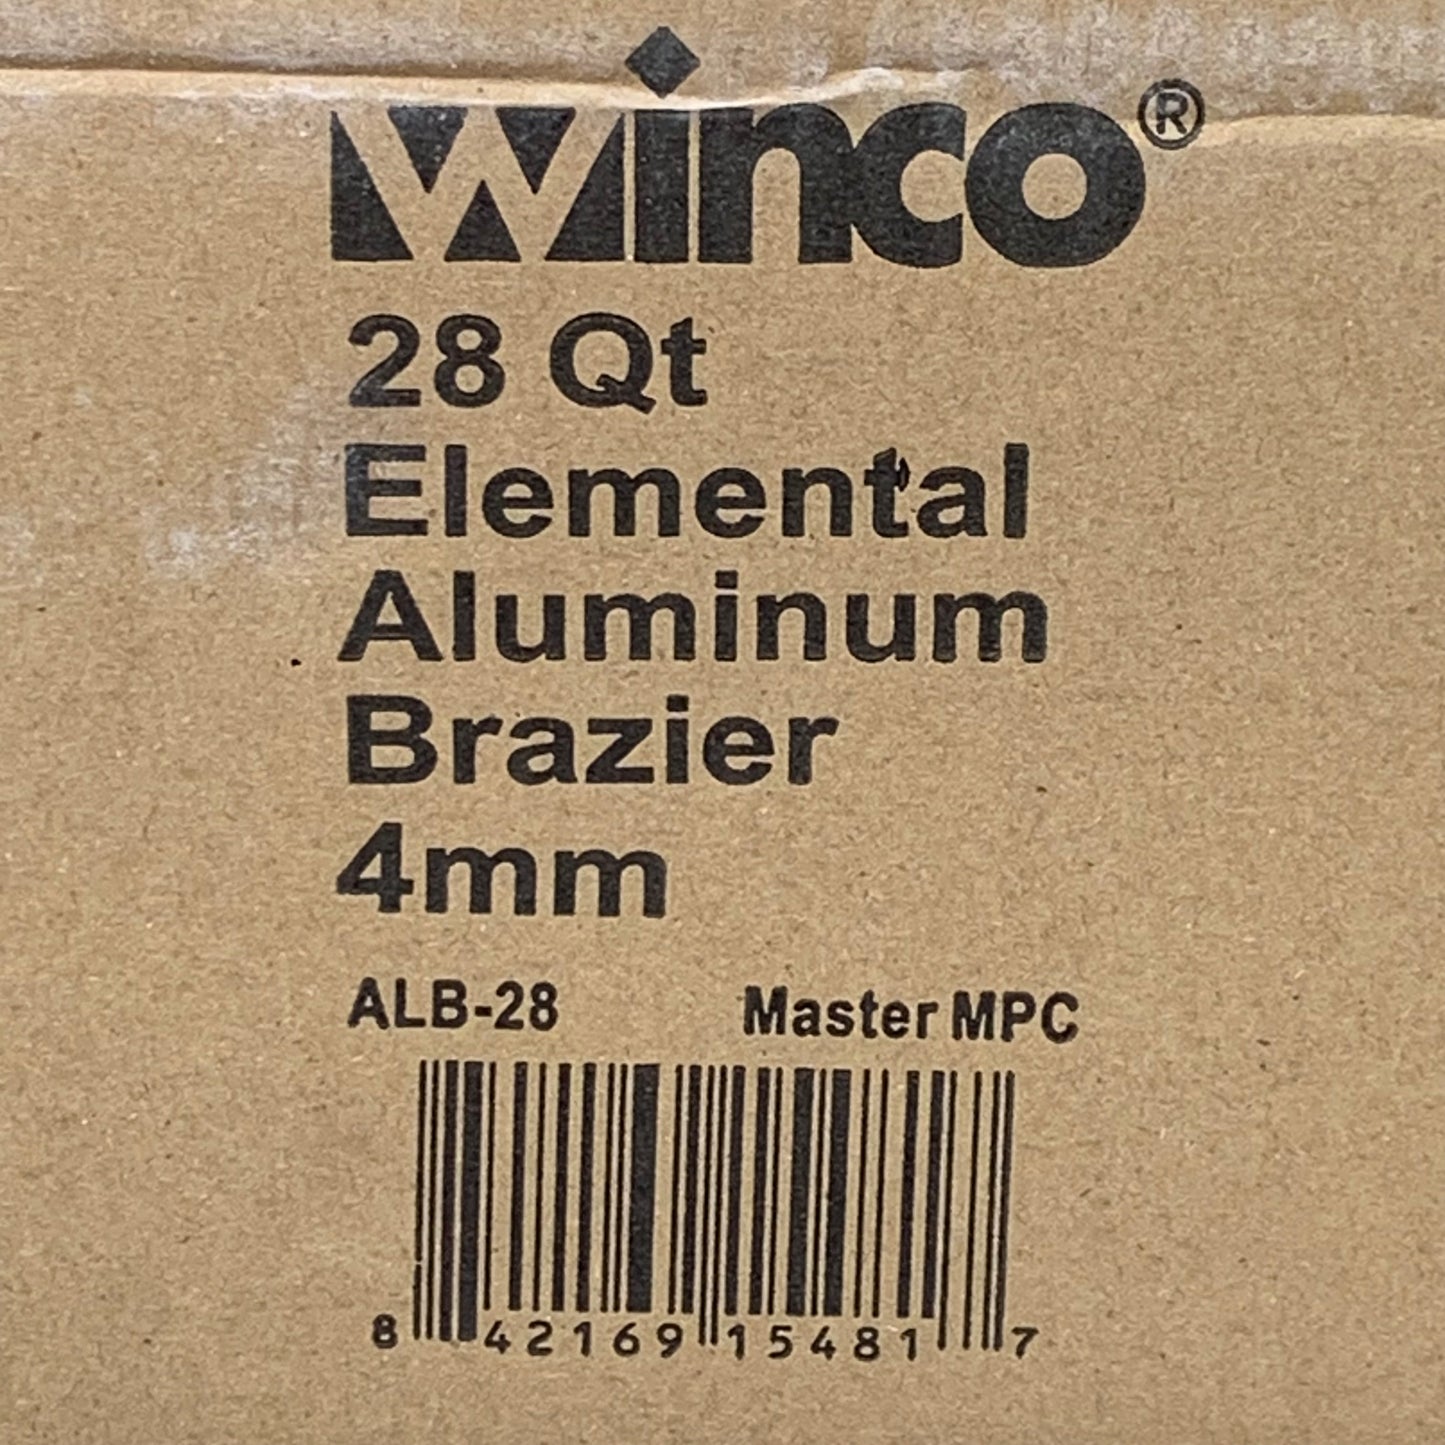 WINCO 28 Quart Elemental Aluminum Brazier 4MM ALB-28